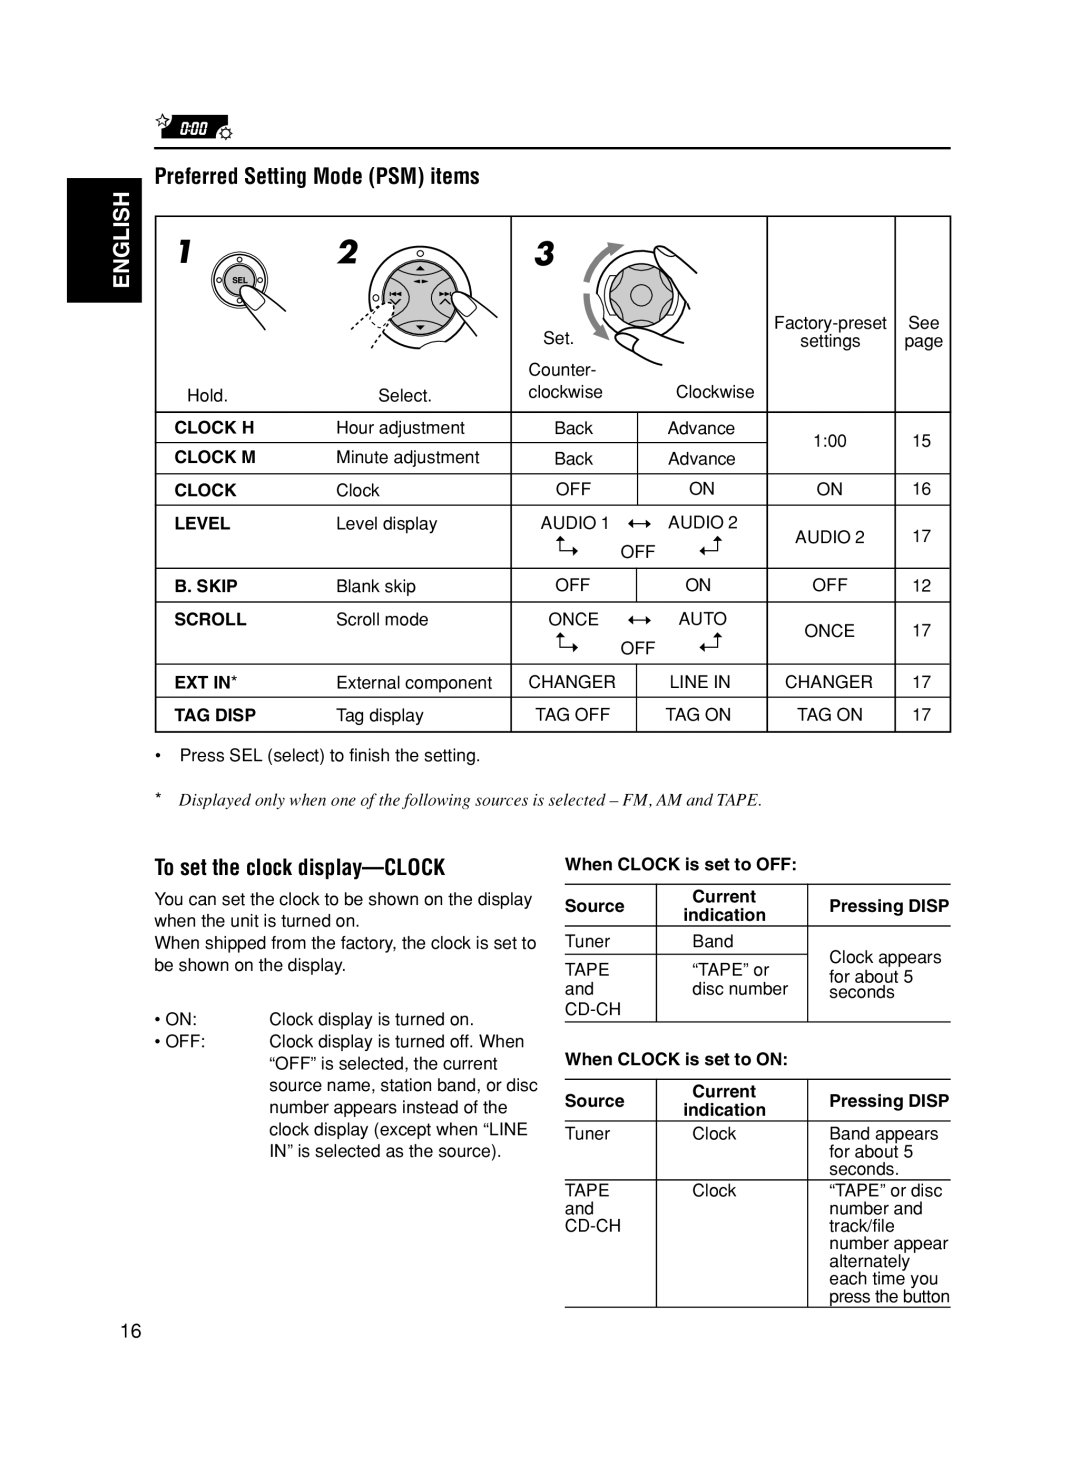 JVC KS-FX490 manual Preferred Setting Mode PSM items, To set the clock display-CLOCK, English, page 